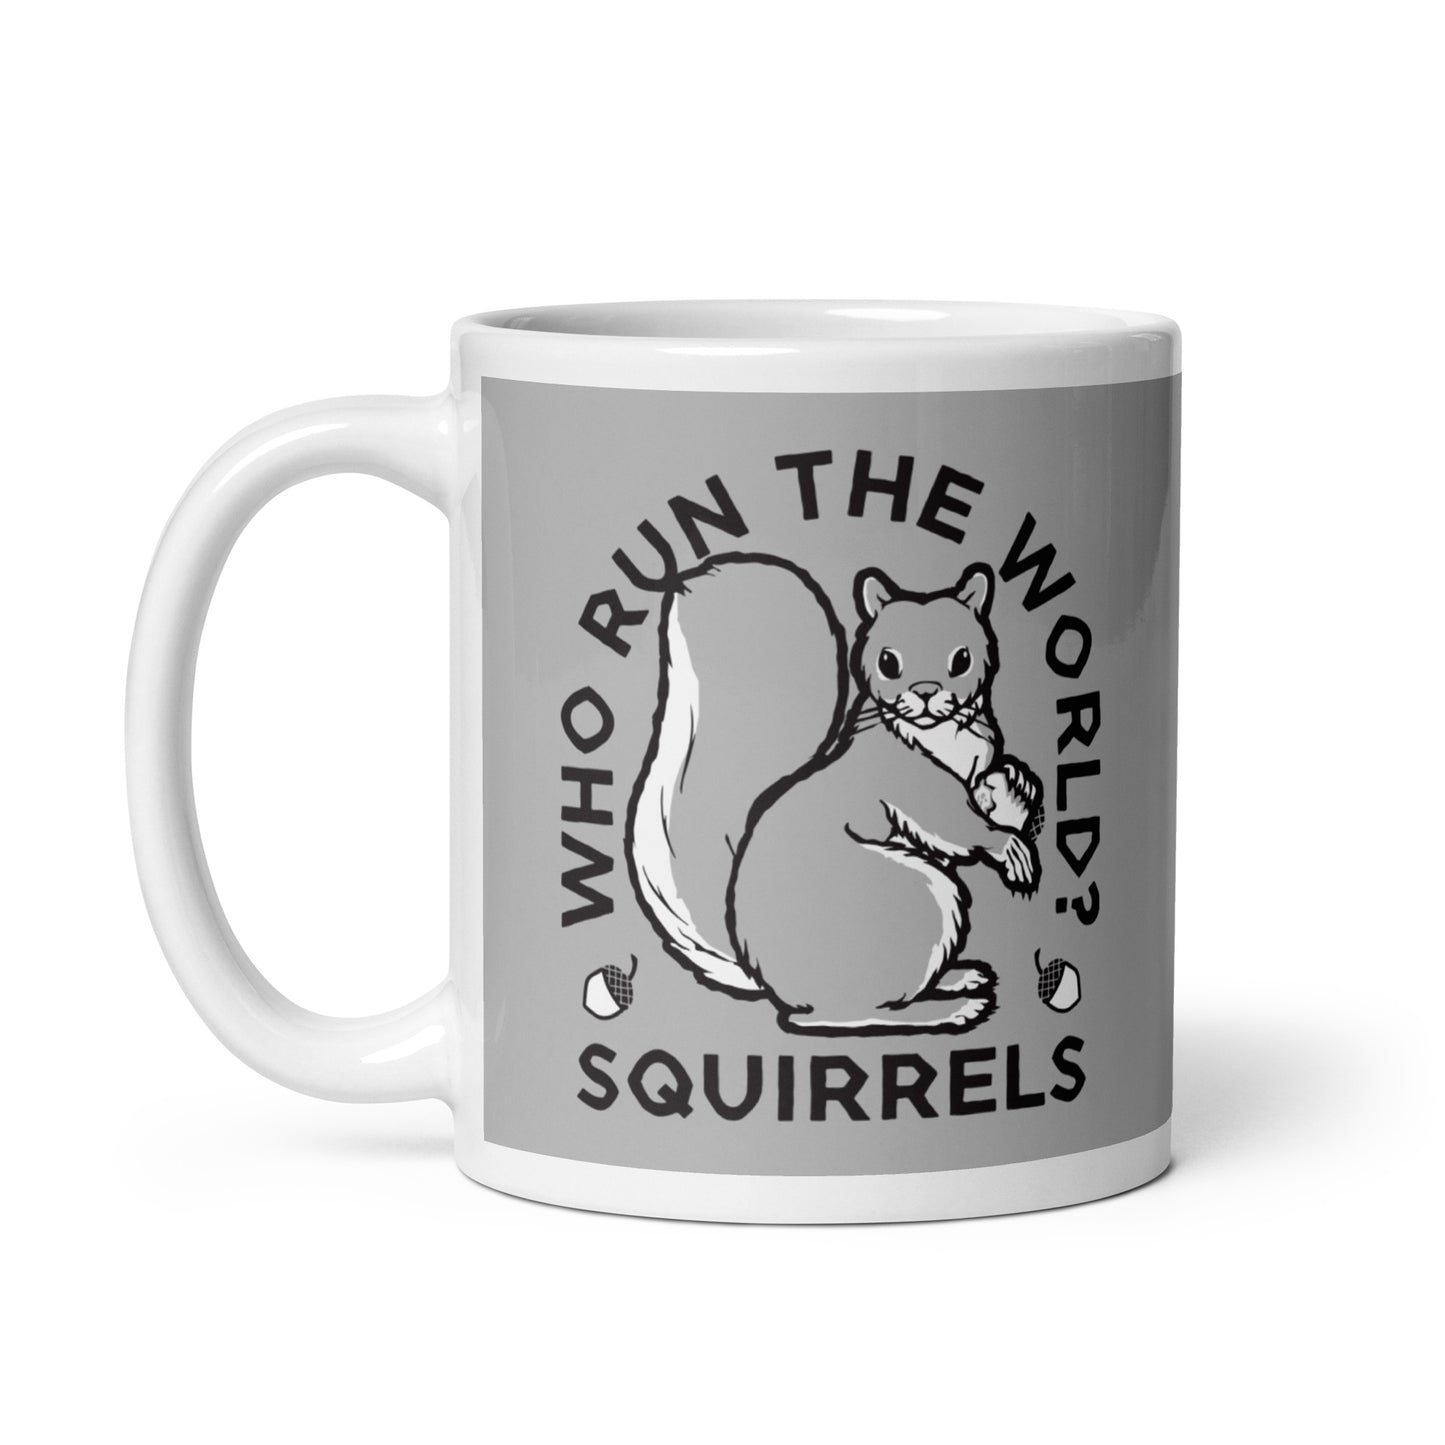 Who Run The World? Squirrels Mug